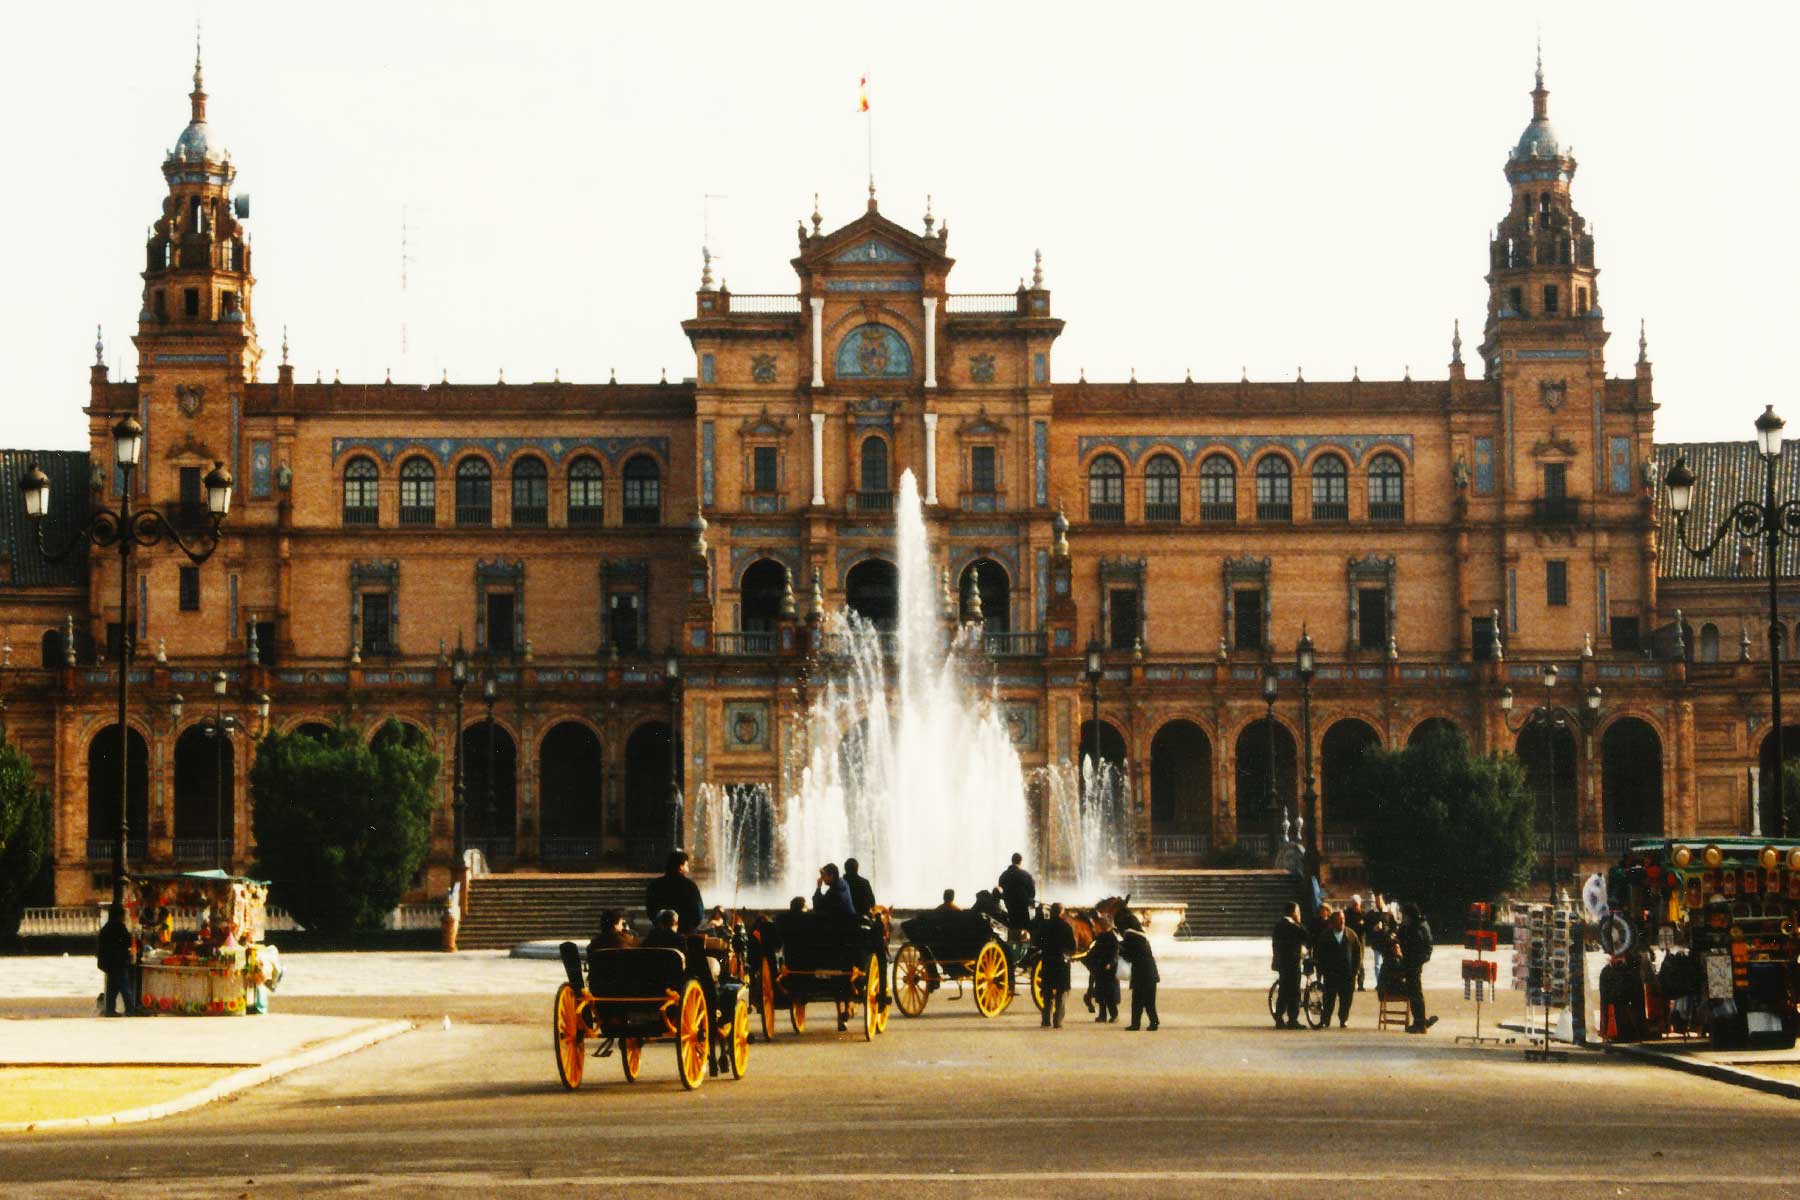 Plaza de Espana | Seville Spain - Steven Andrew Martin - Study Abroad Photo Journal